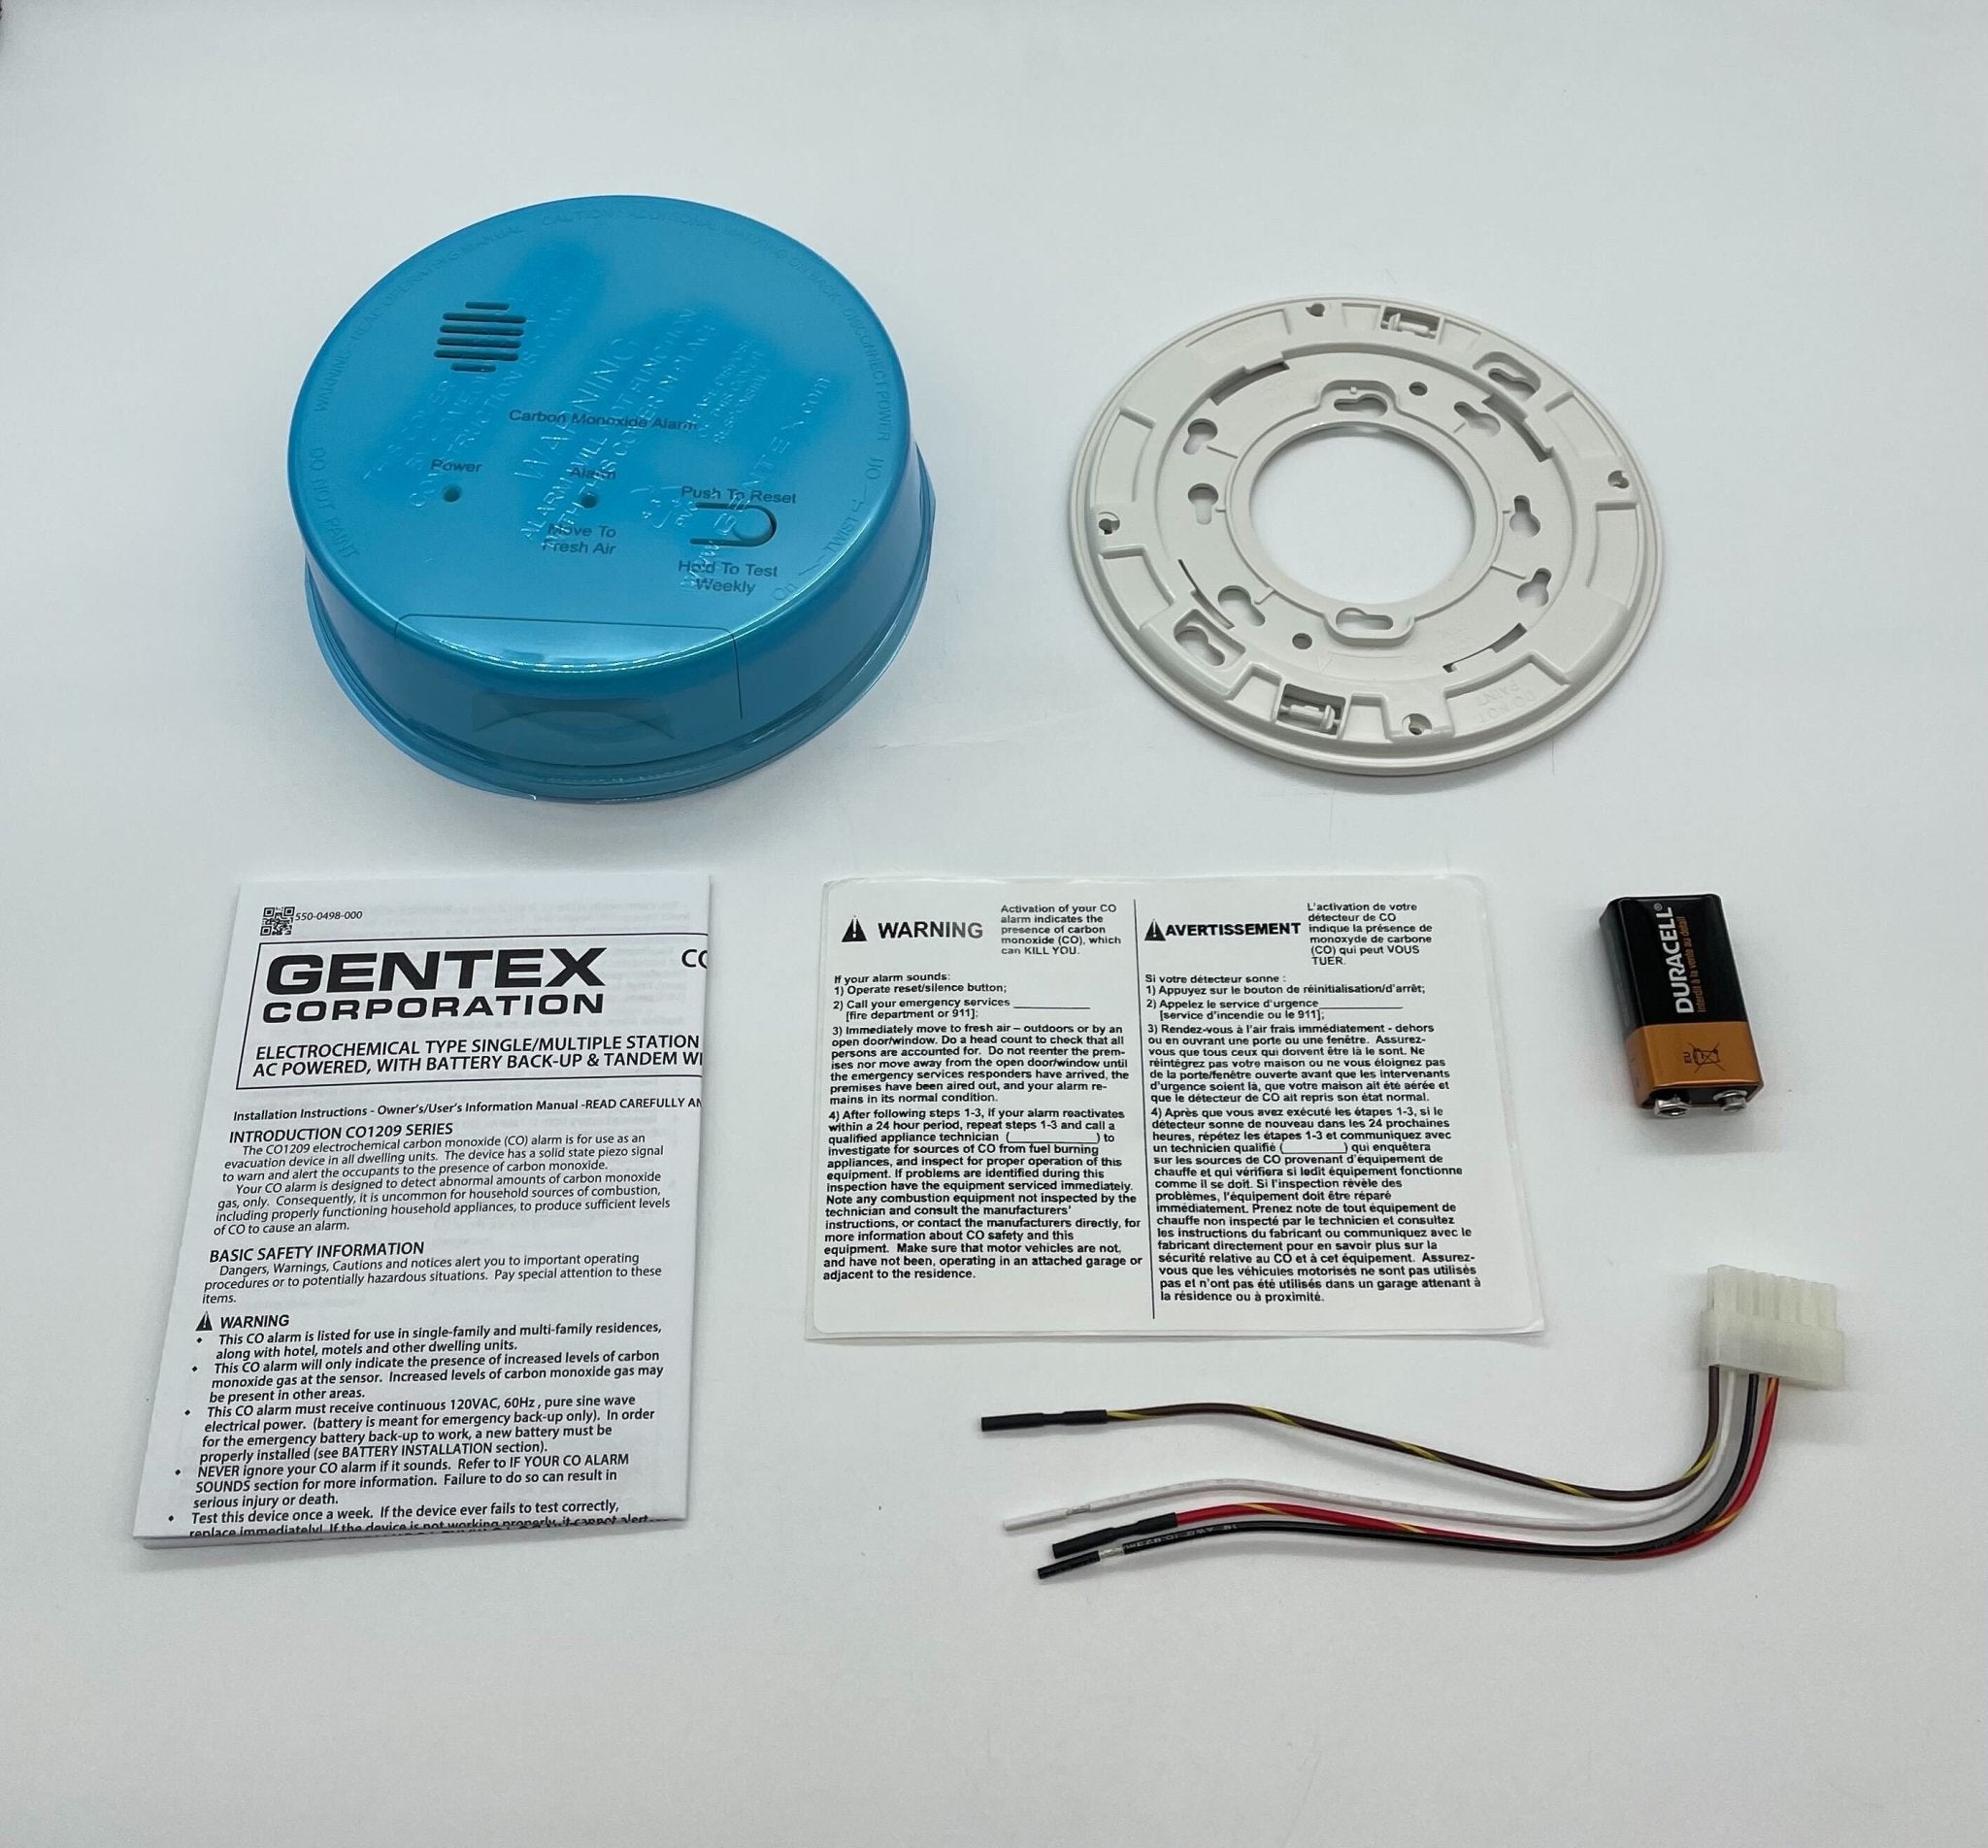 Gentex CO1209 - The Fire Alarm Supplier